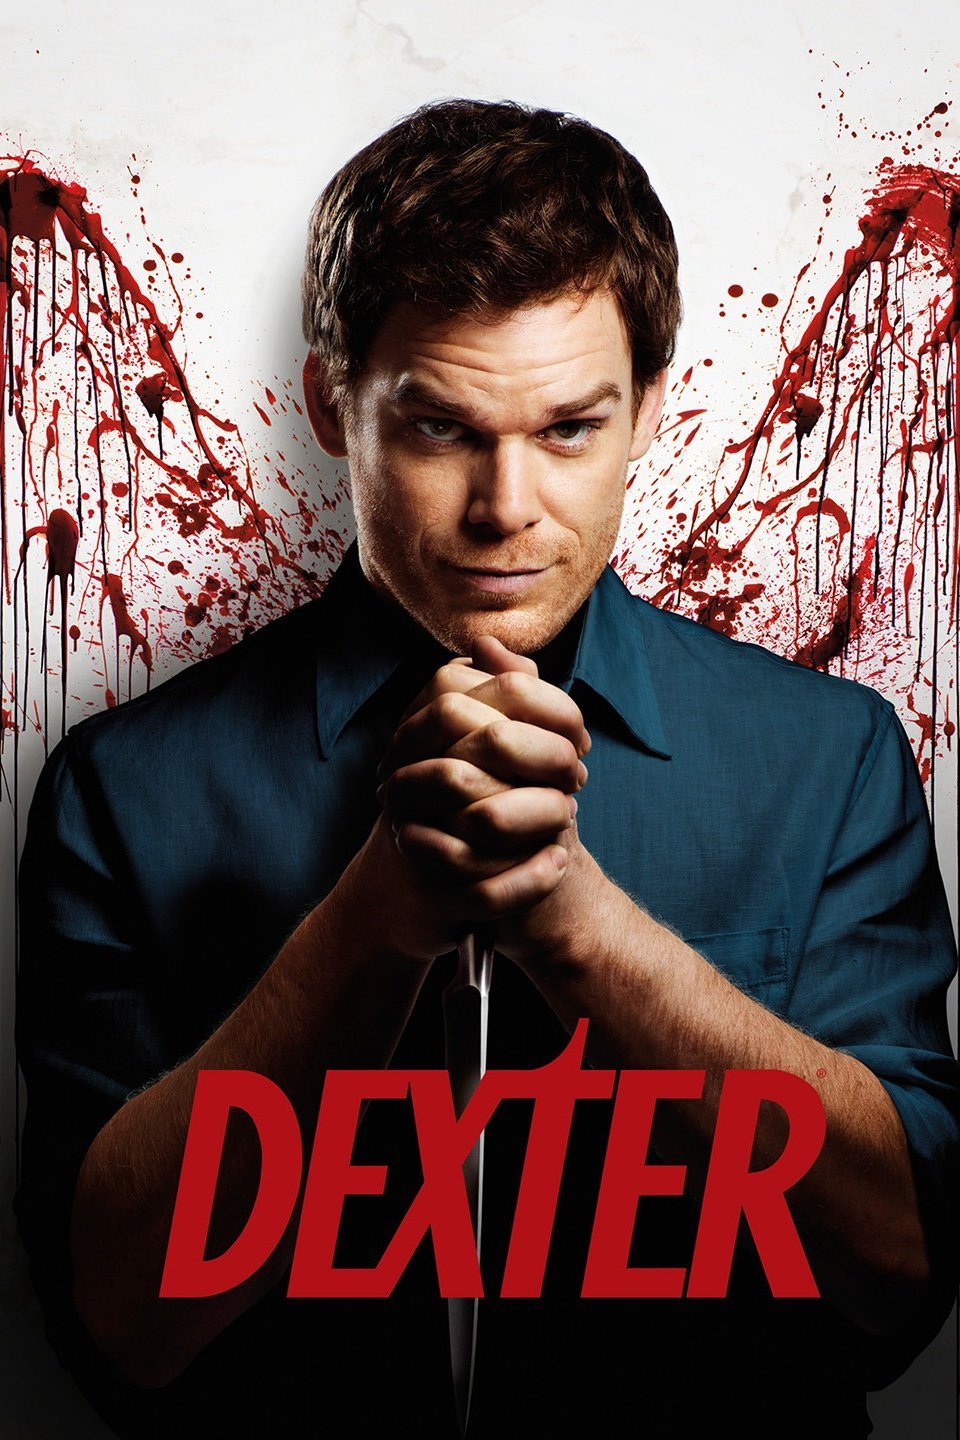 Dexter Season 2